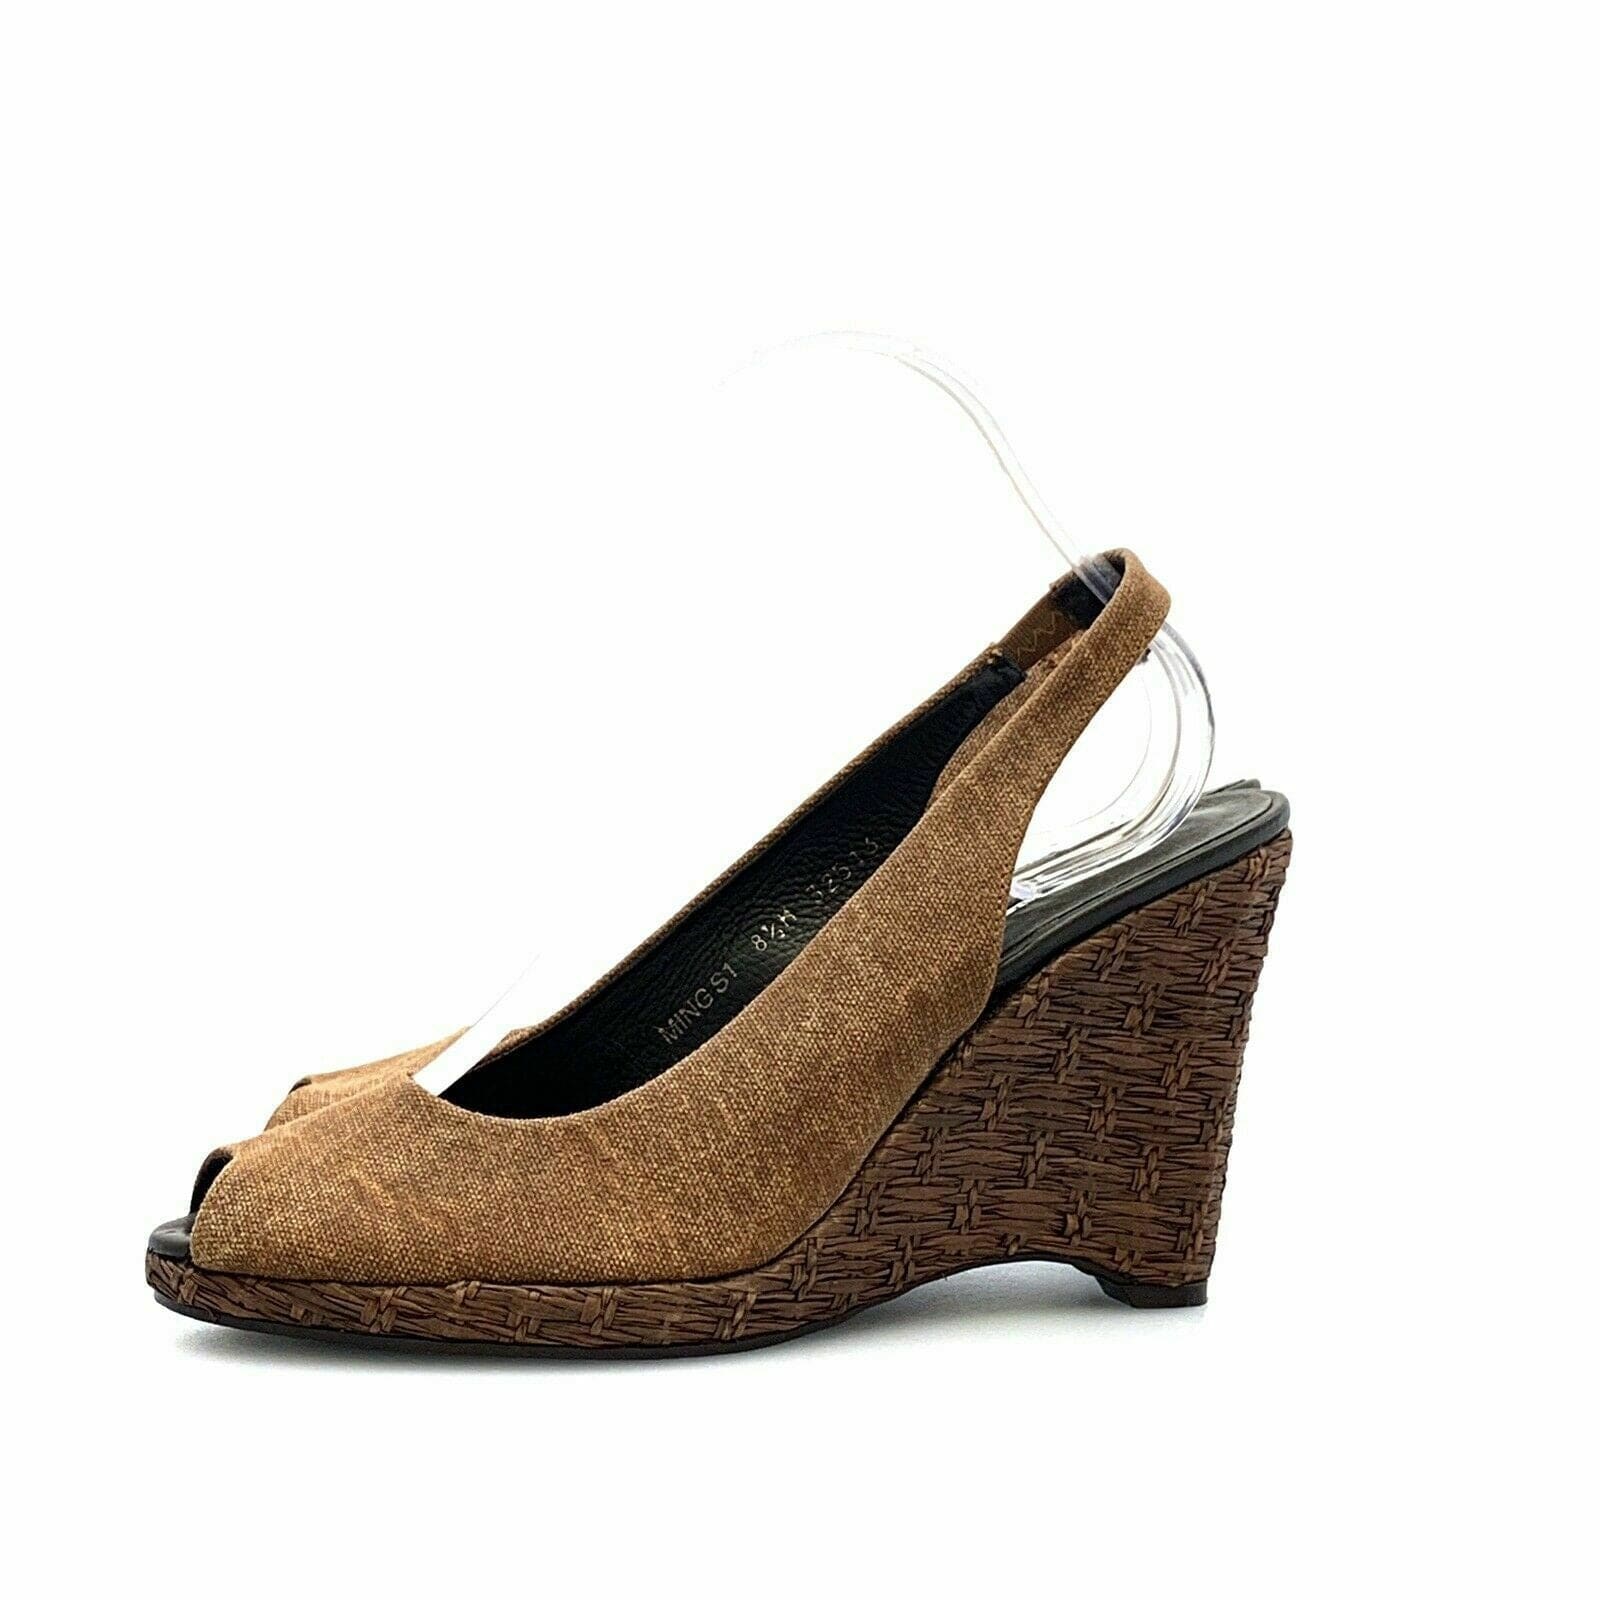 Donald Pliner Womens Shoes SIZE 8.5M Brown Canvas Mings S1 32514 Wedge Heels - parsimonyshoppes